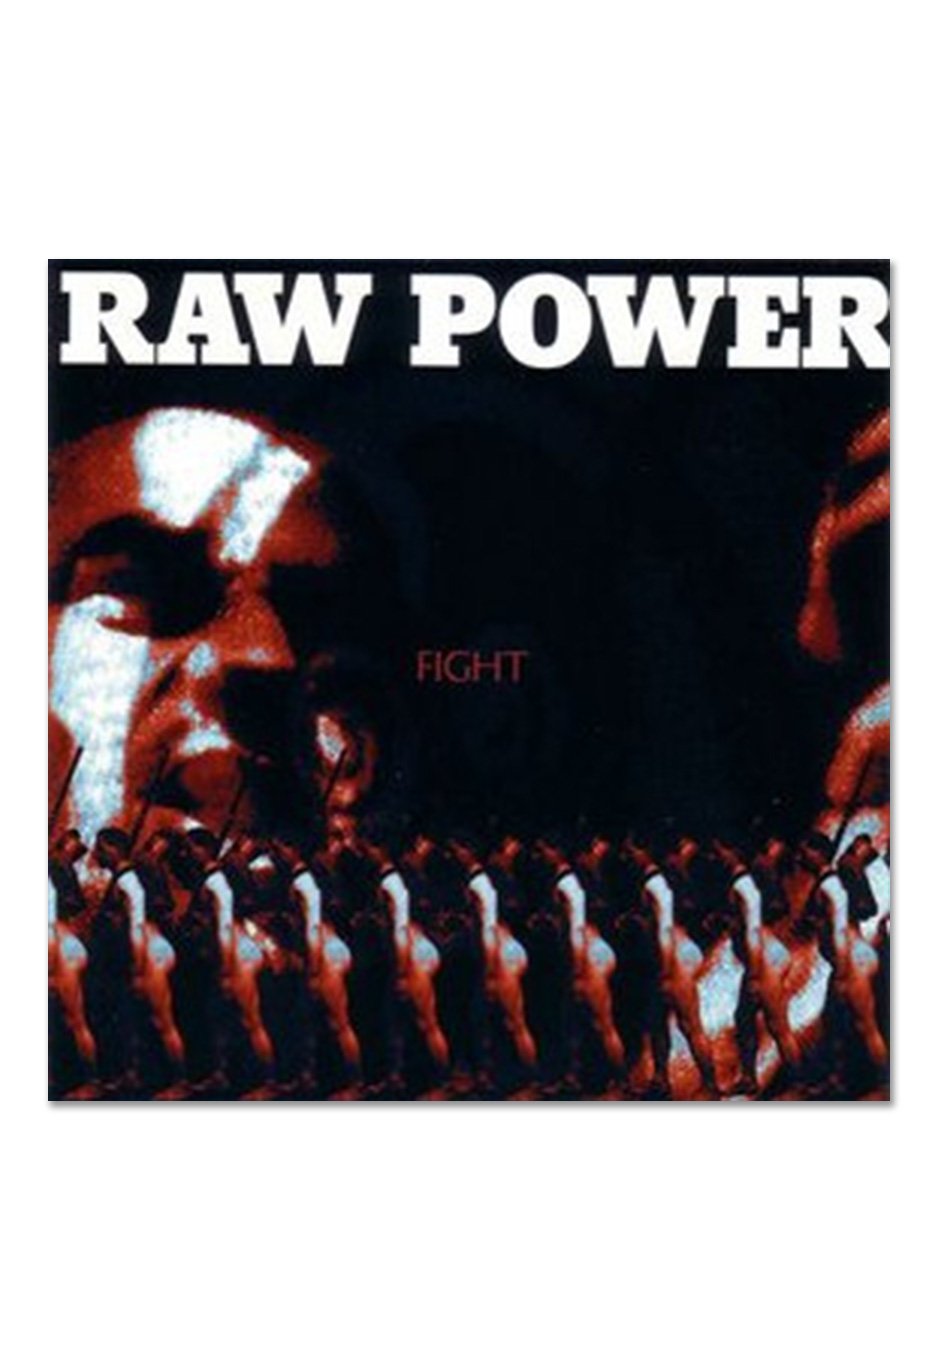 Raw Power - Fight Lila - Colored Vinyl